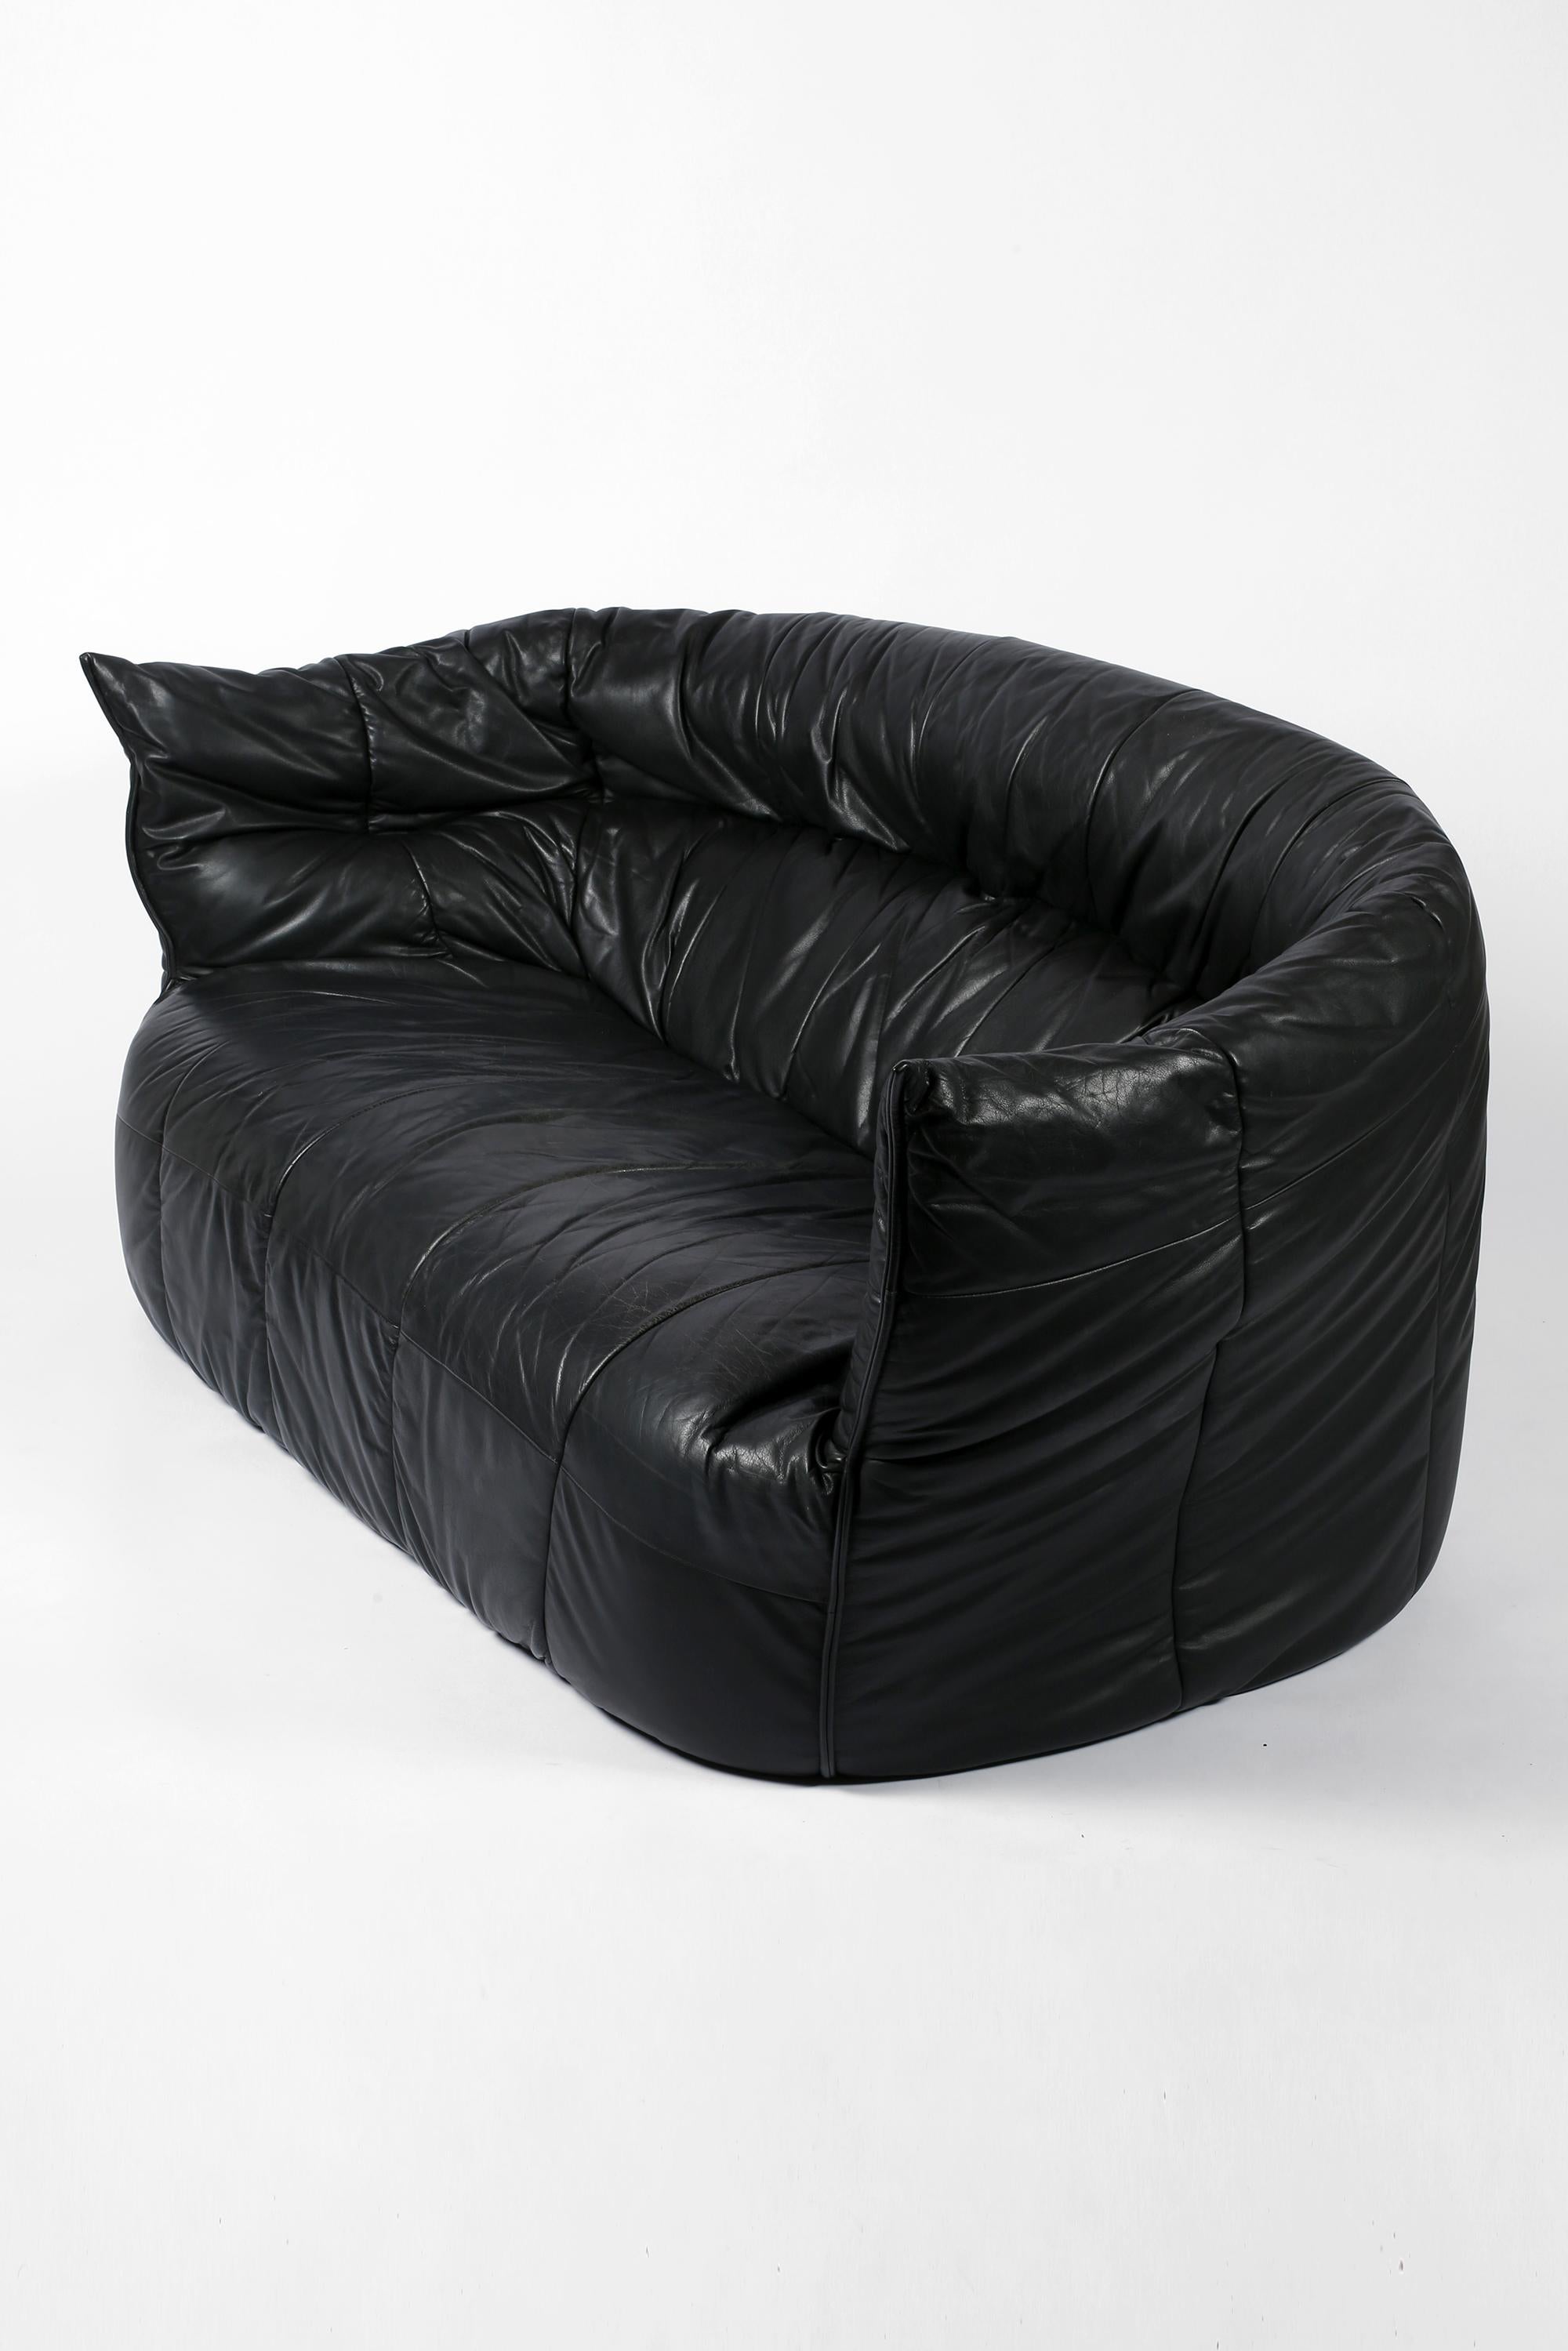 French 1980s Black Leather Brigantin Sofa by Michel Ducaroy for Lignet Roset For Sale 4